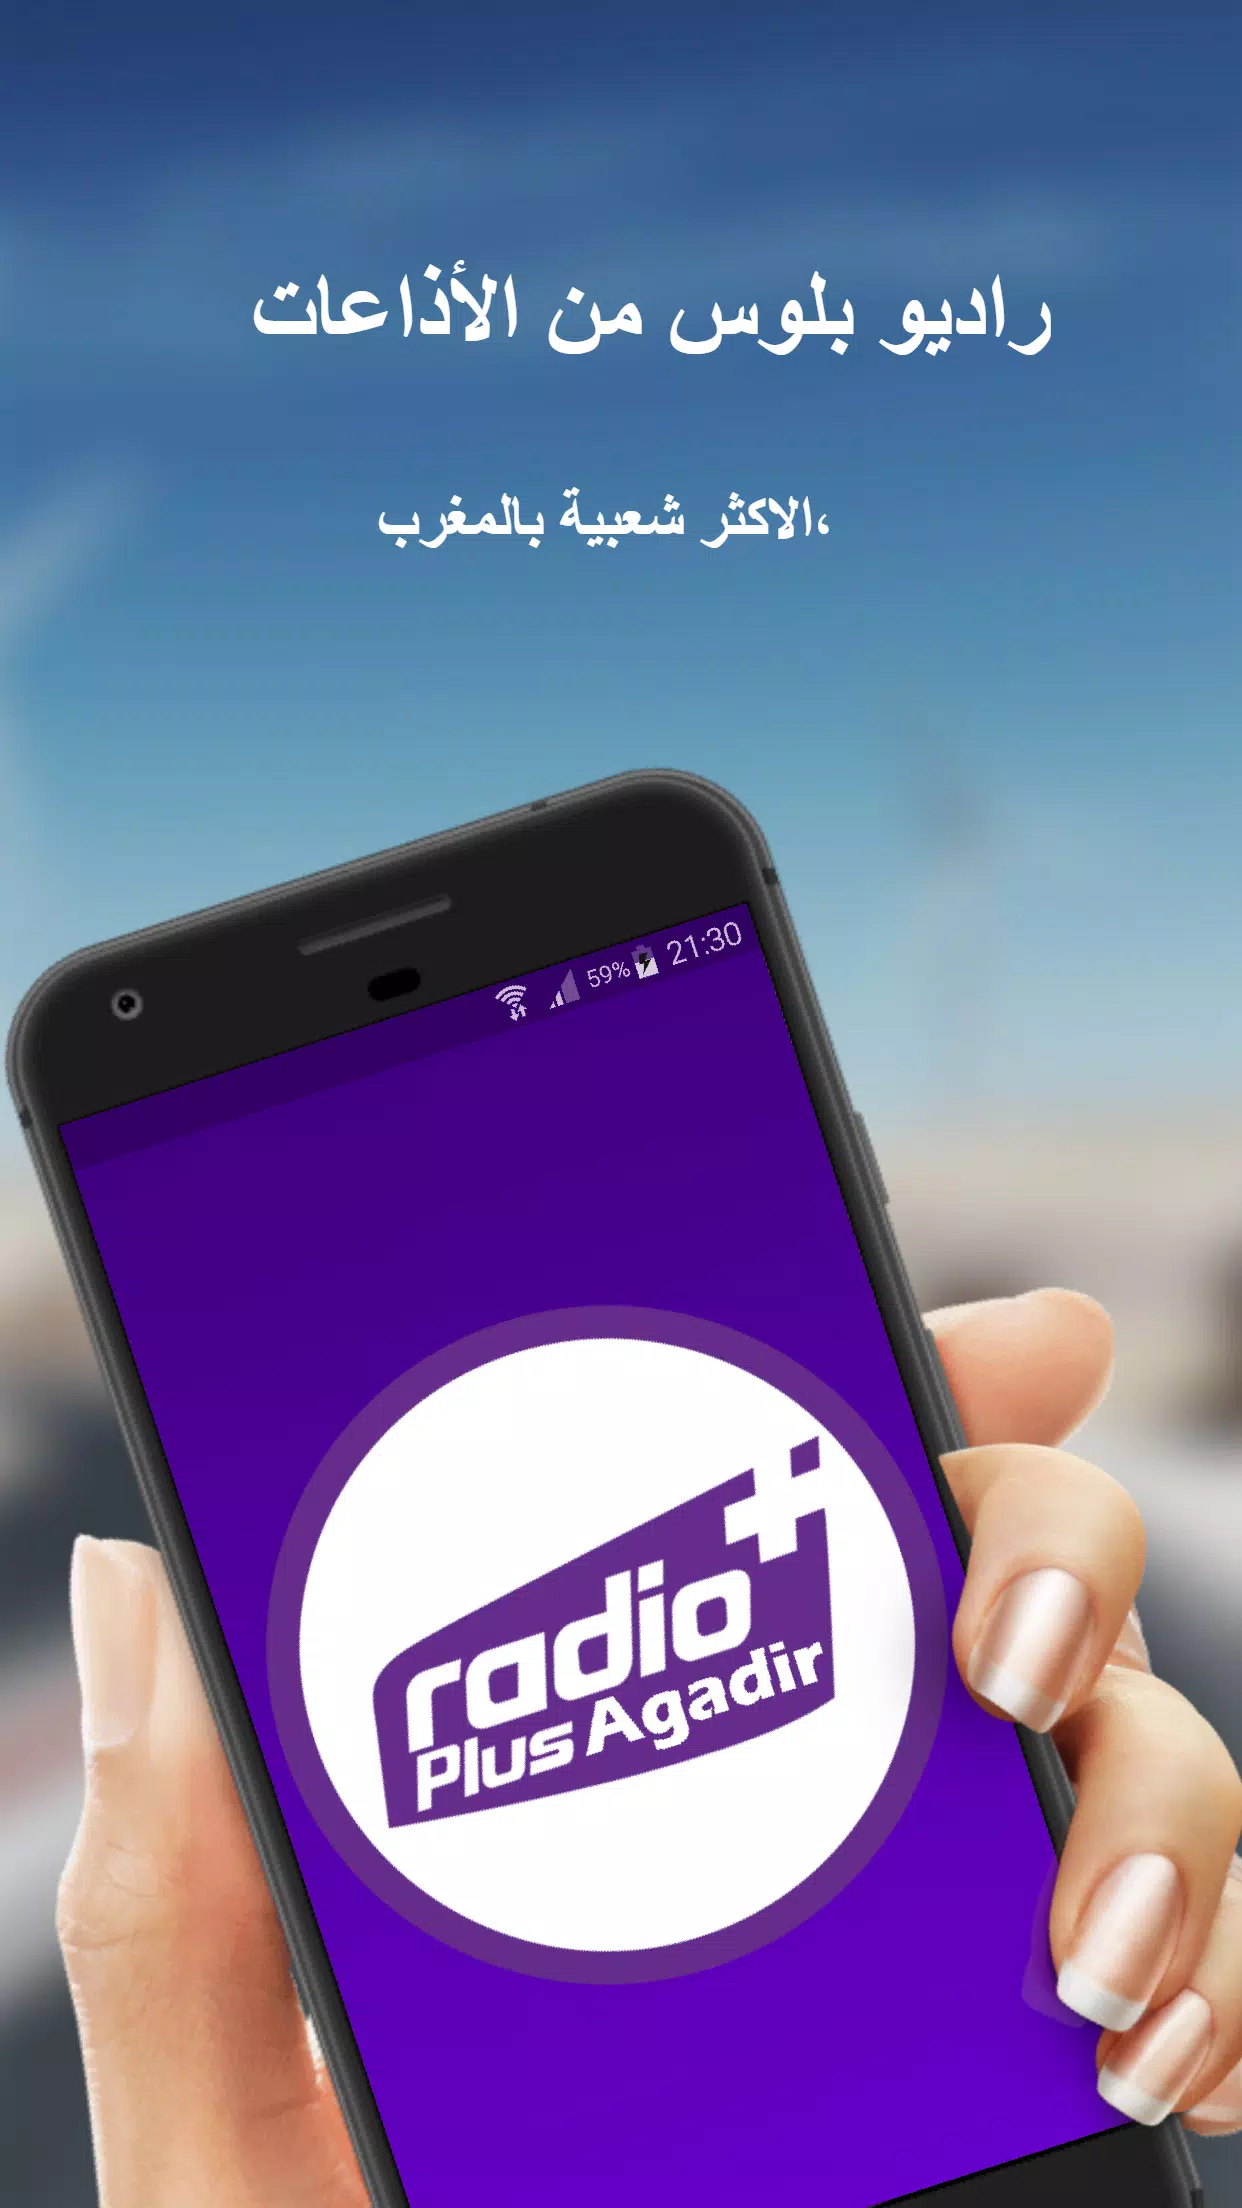 Radio Plus agadir APK for Android Download